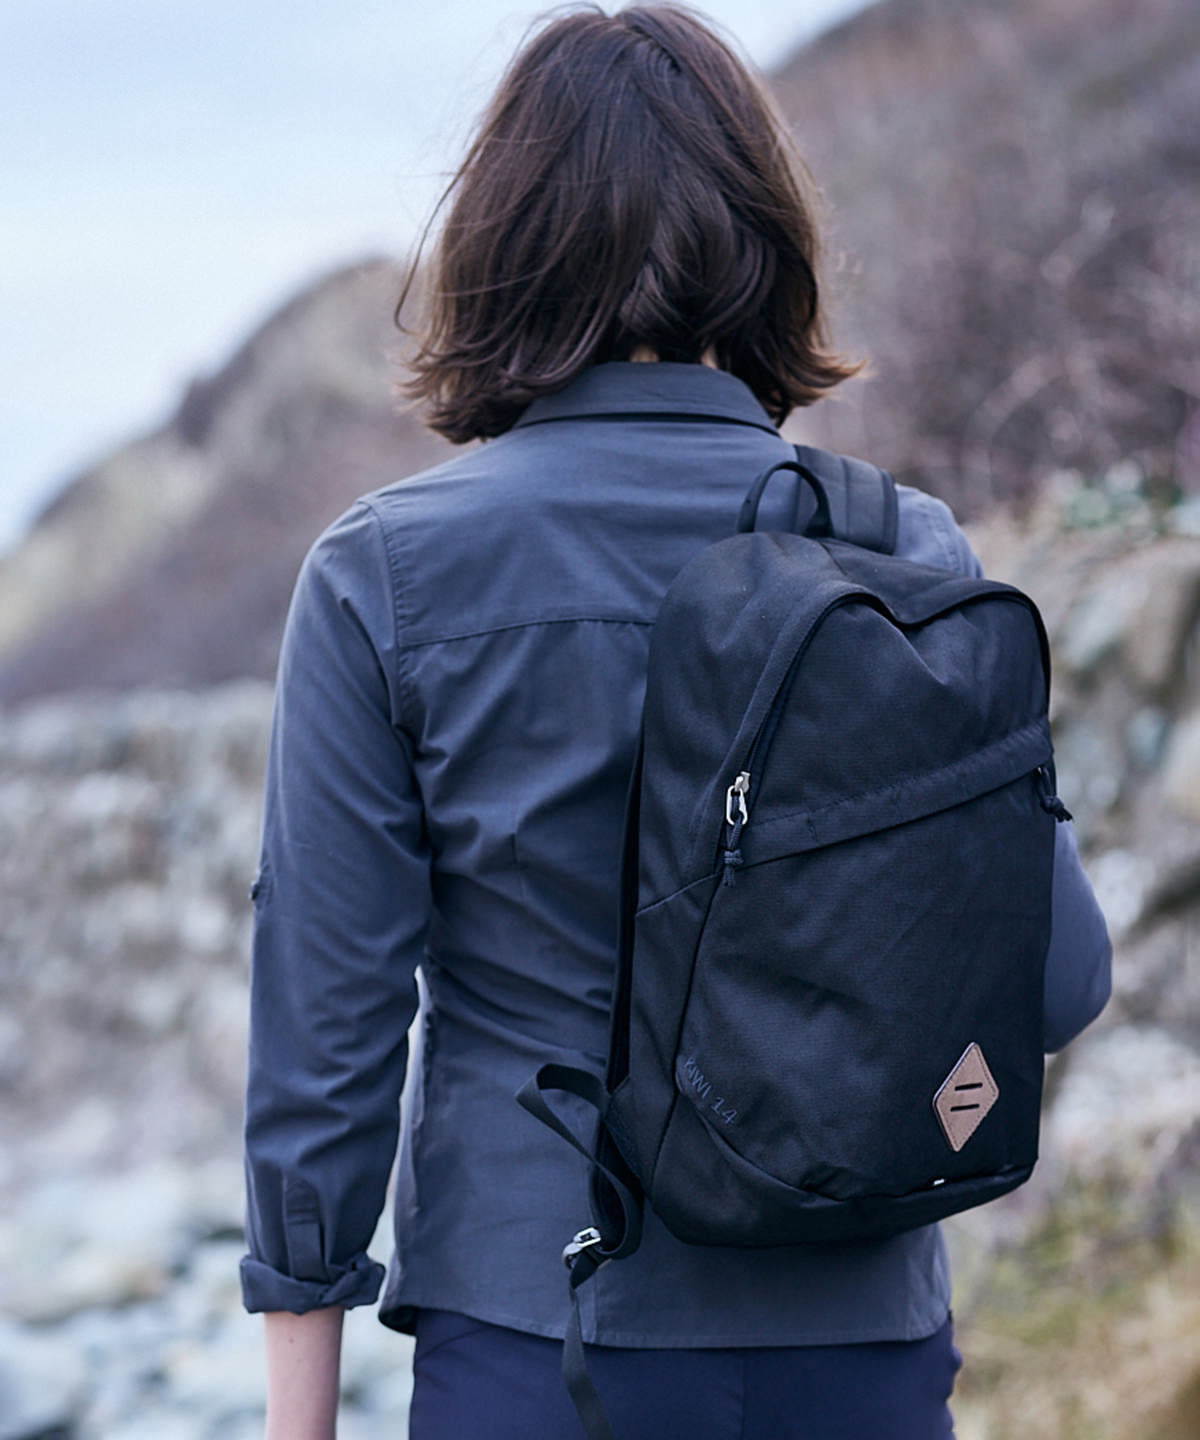 Töskur - Expert Kiwi Backpack 14L